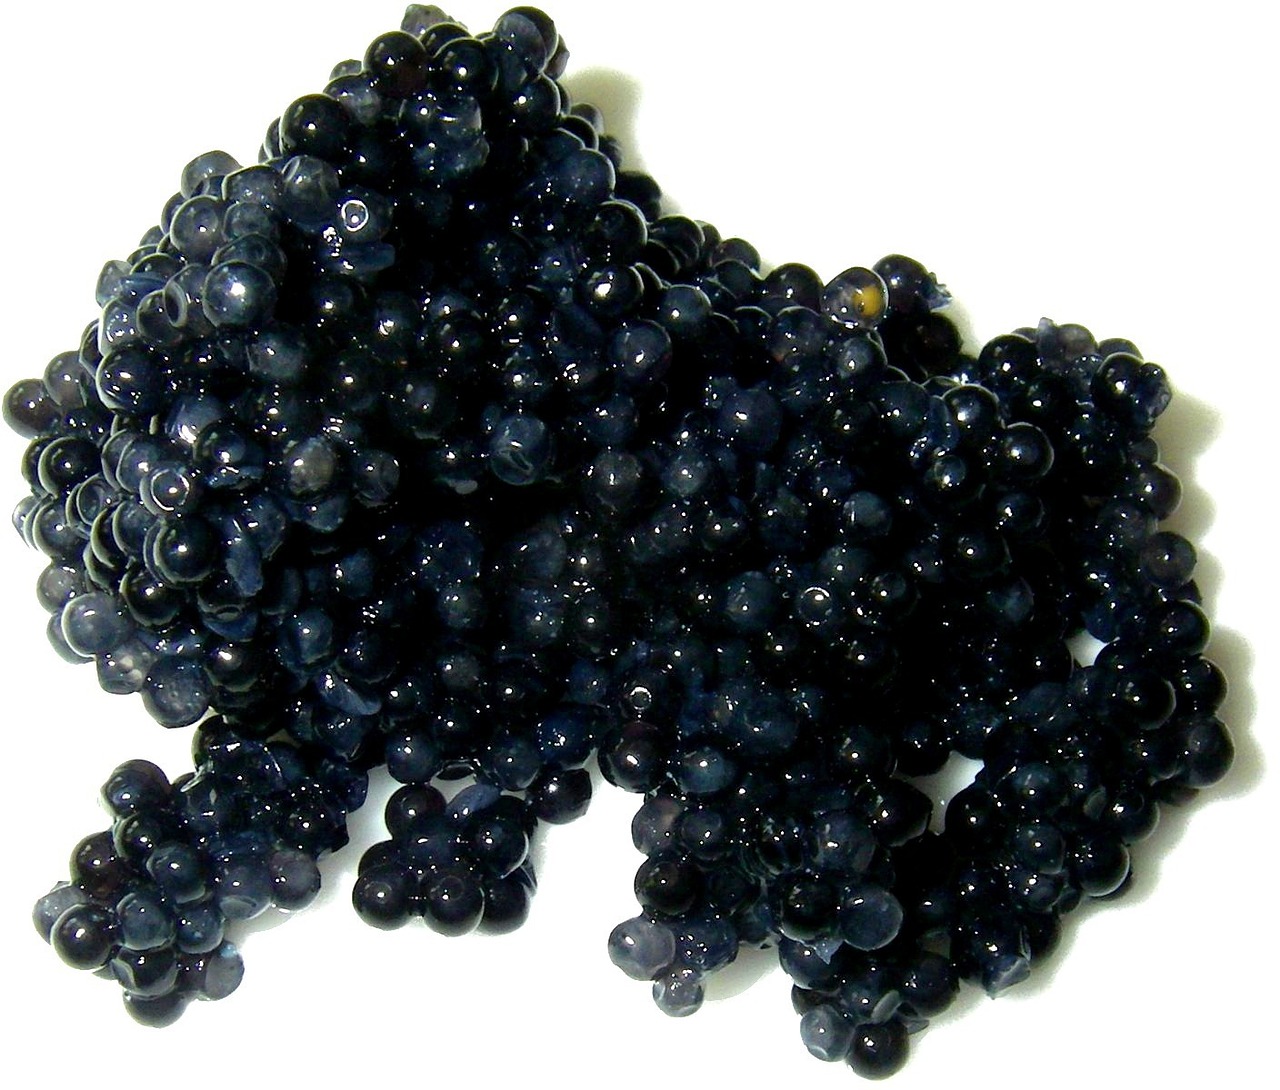 caviar spawn interference free photo